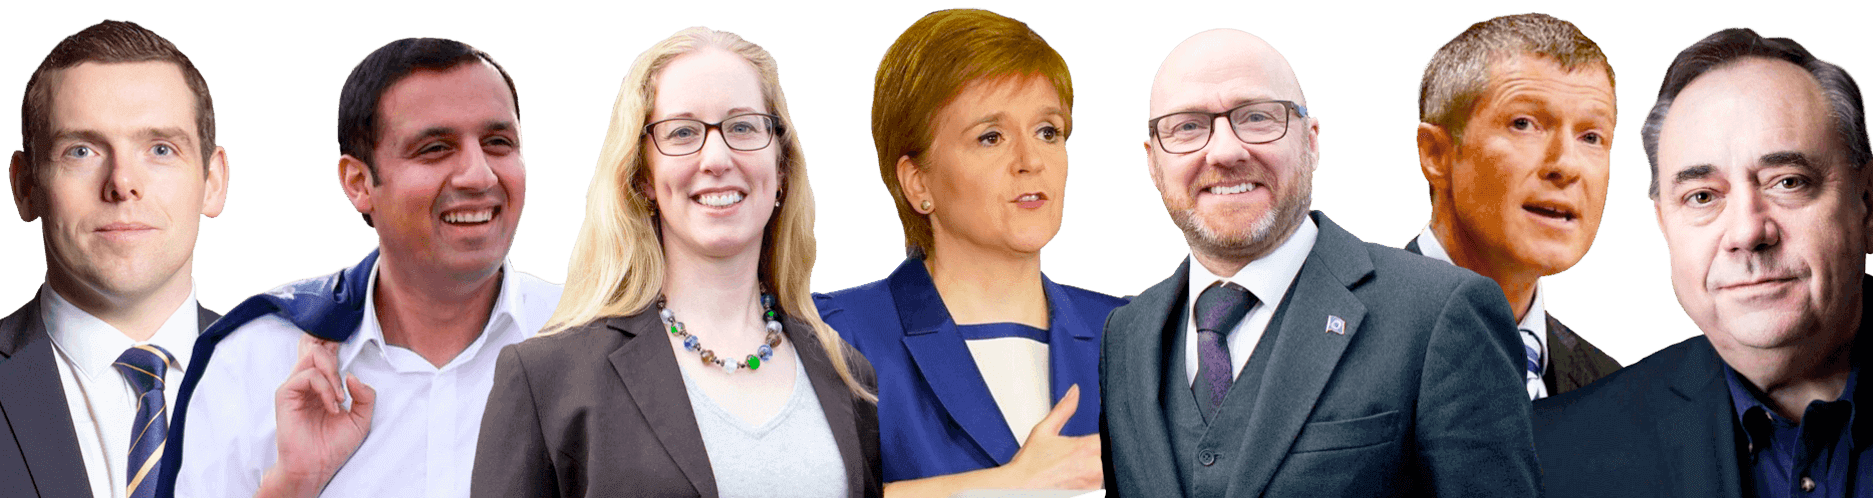 Scotland politicians cutout 1